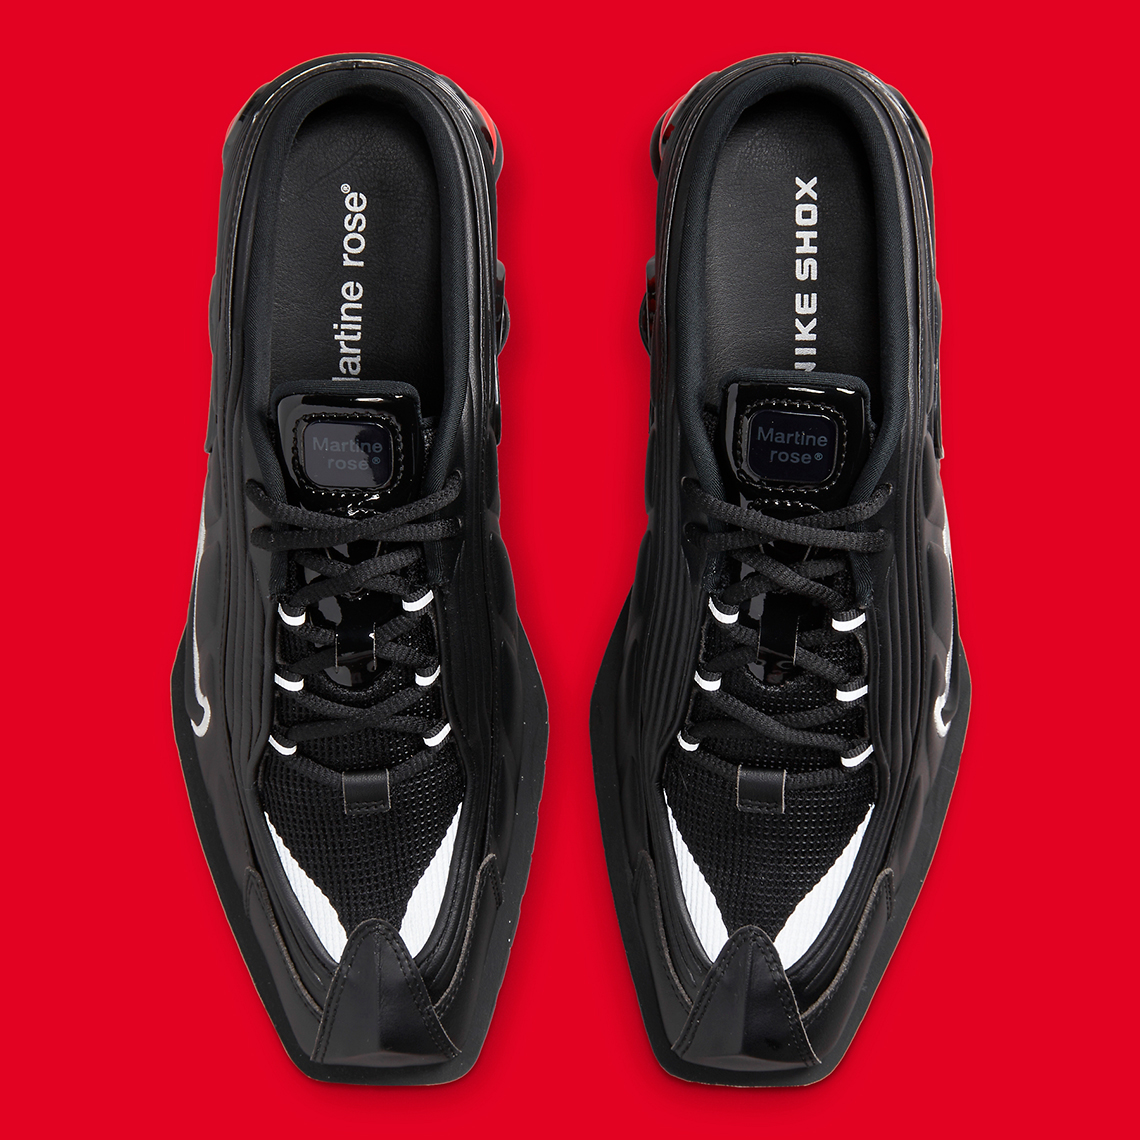 technical September Bandit Martine Rose Nike Shox MR4 Spring Summer 2023 Release Info | SneakerNews.com